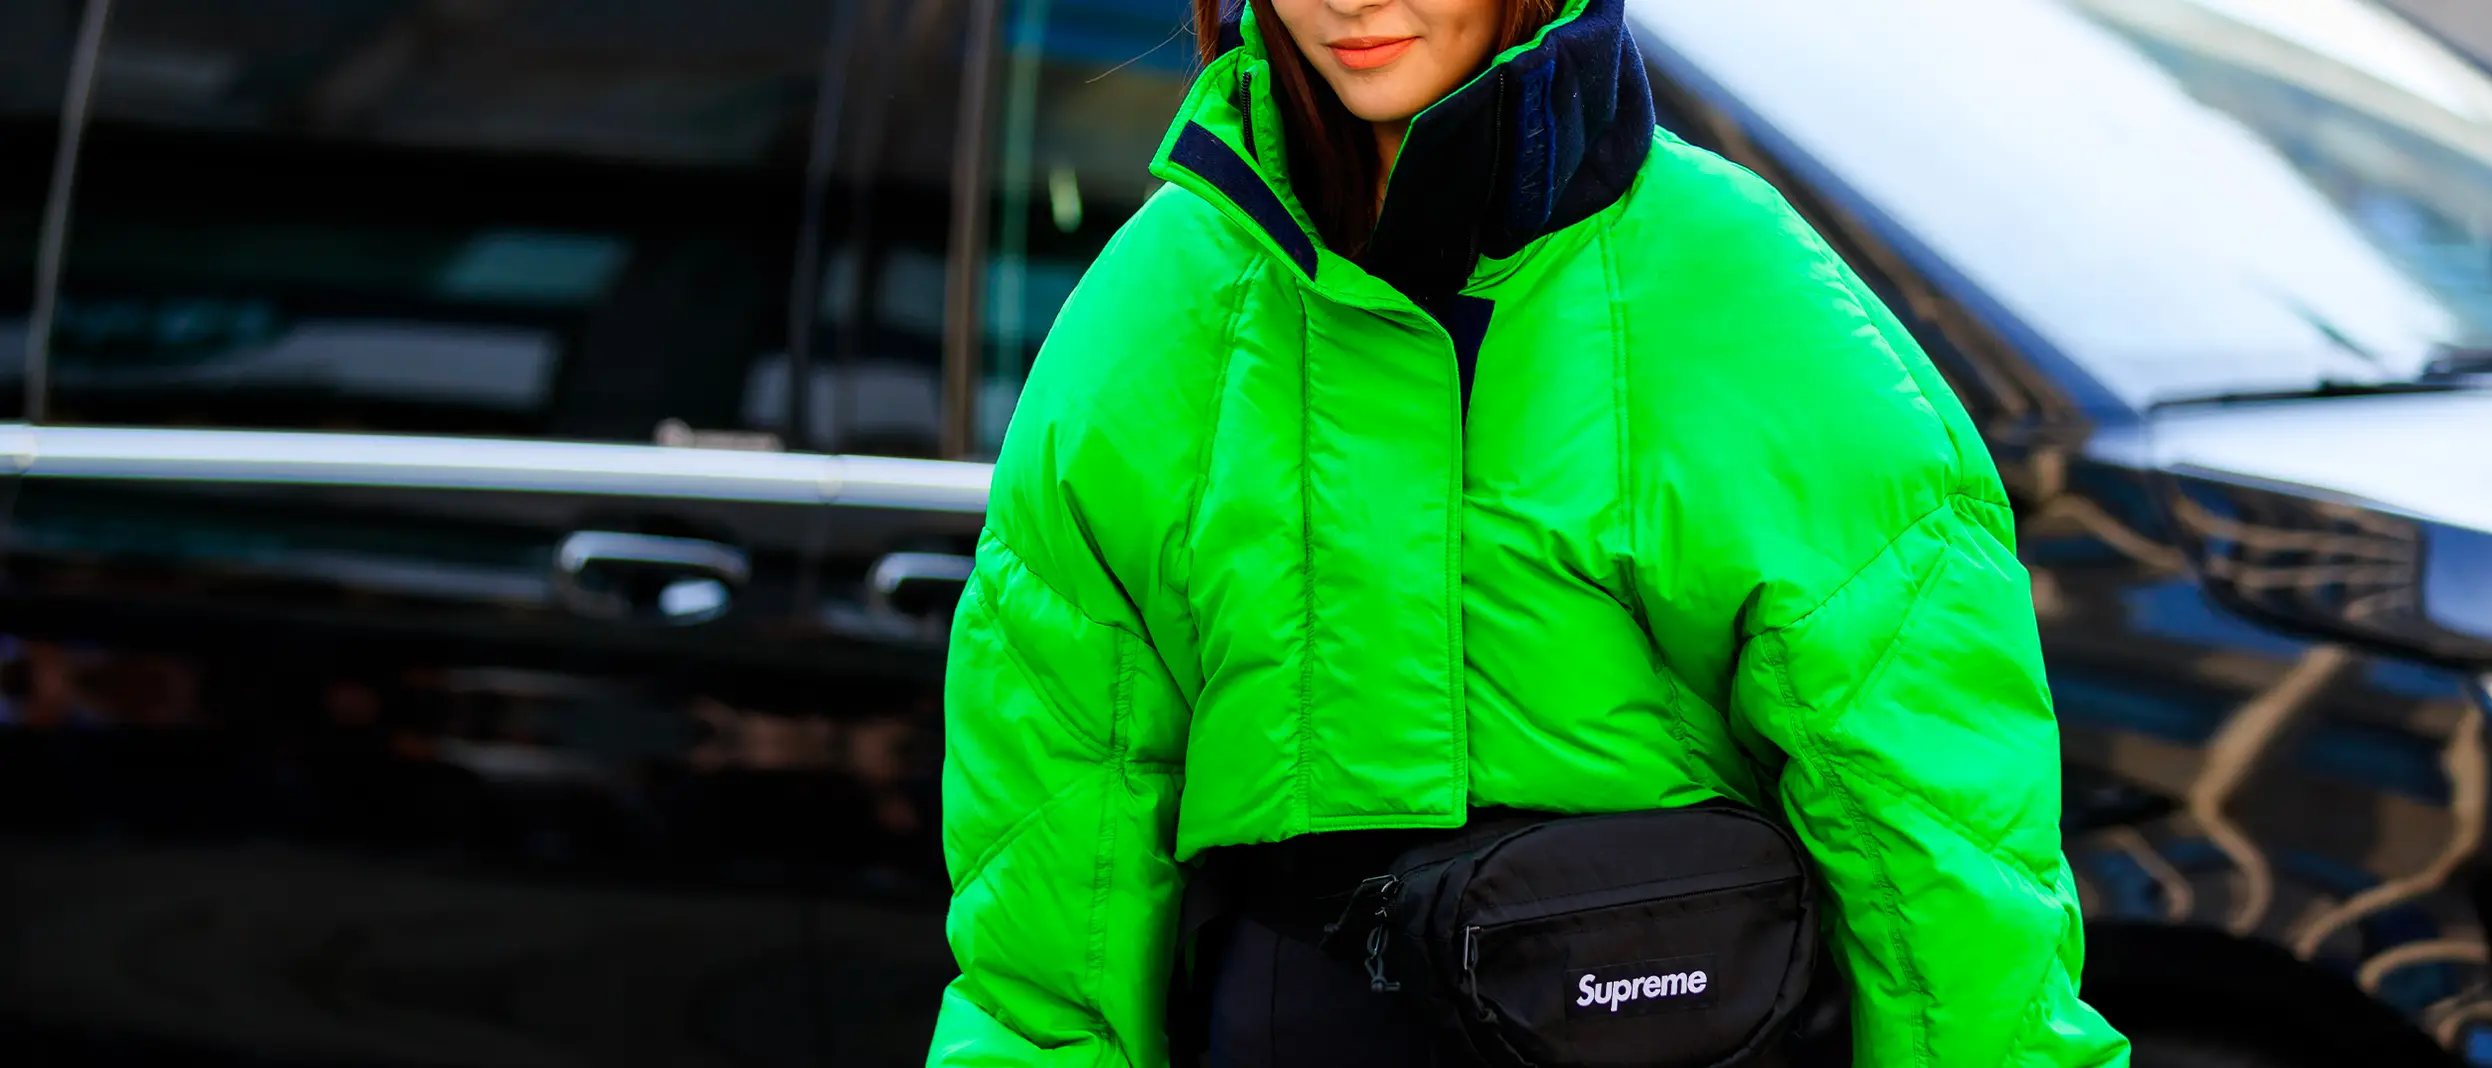 woman-walking-supreme-jacket-neon-green-coat-street-style-fashion-week.jpg